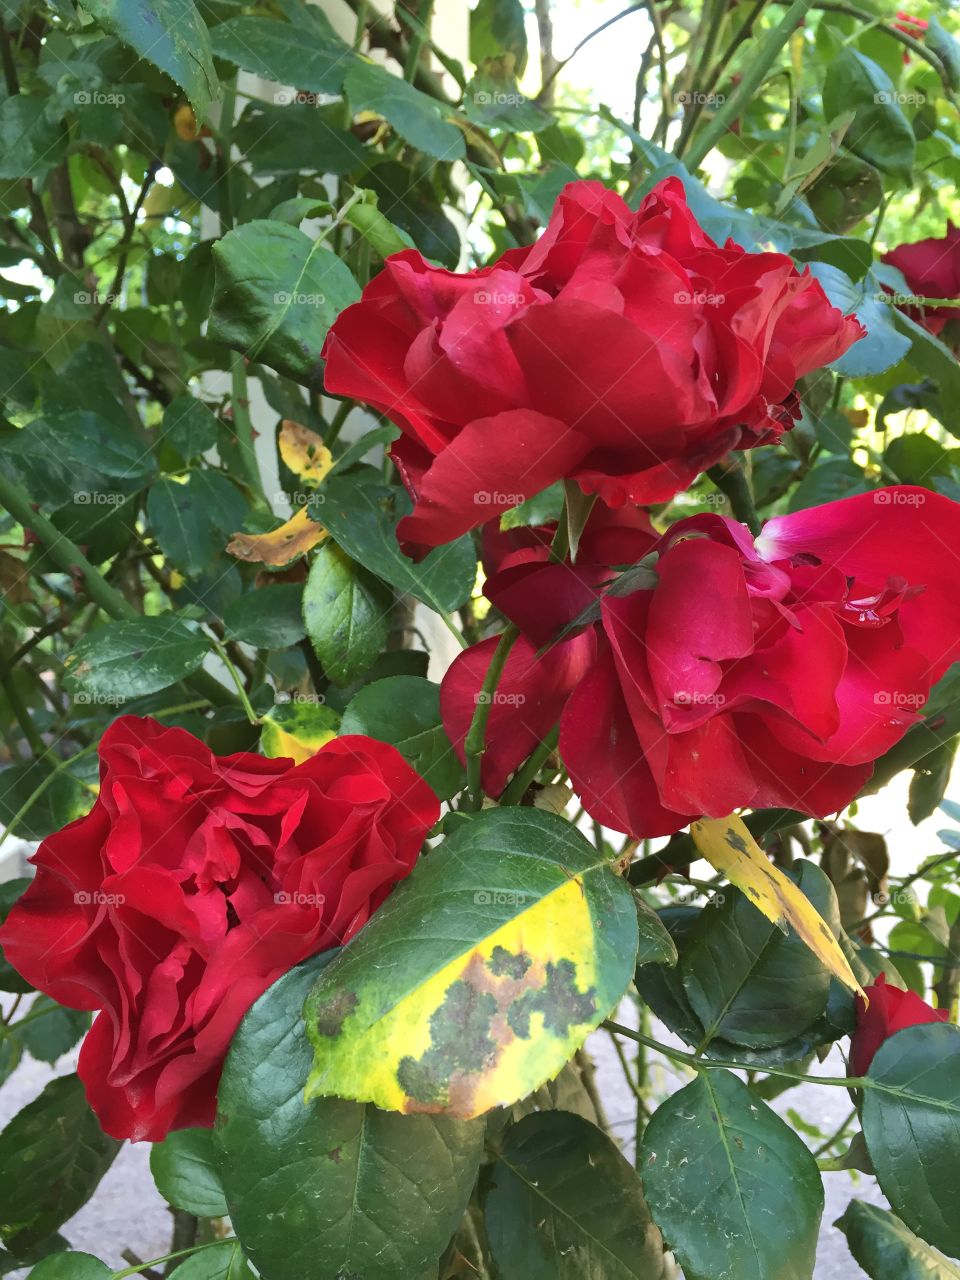 Roses in the garden 